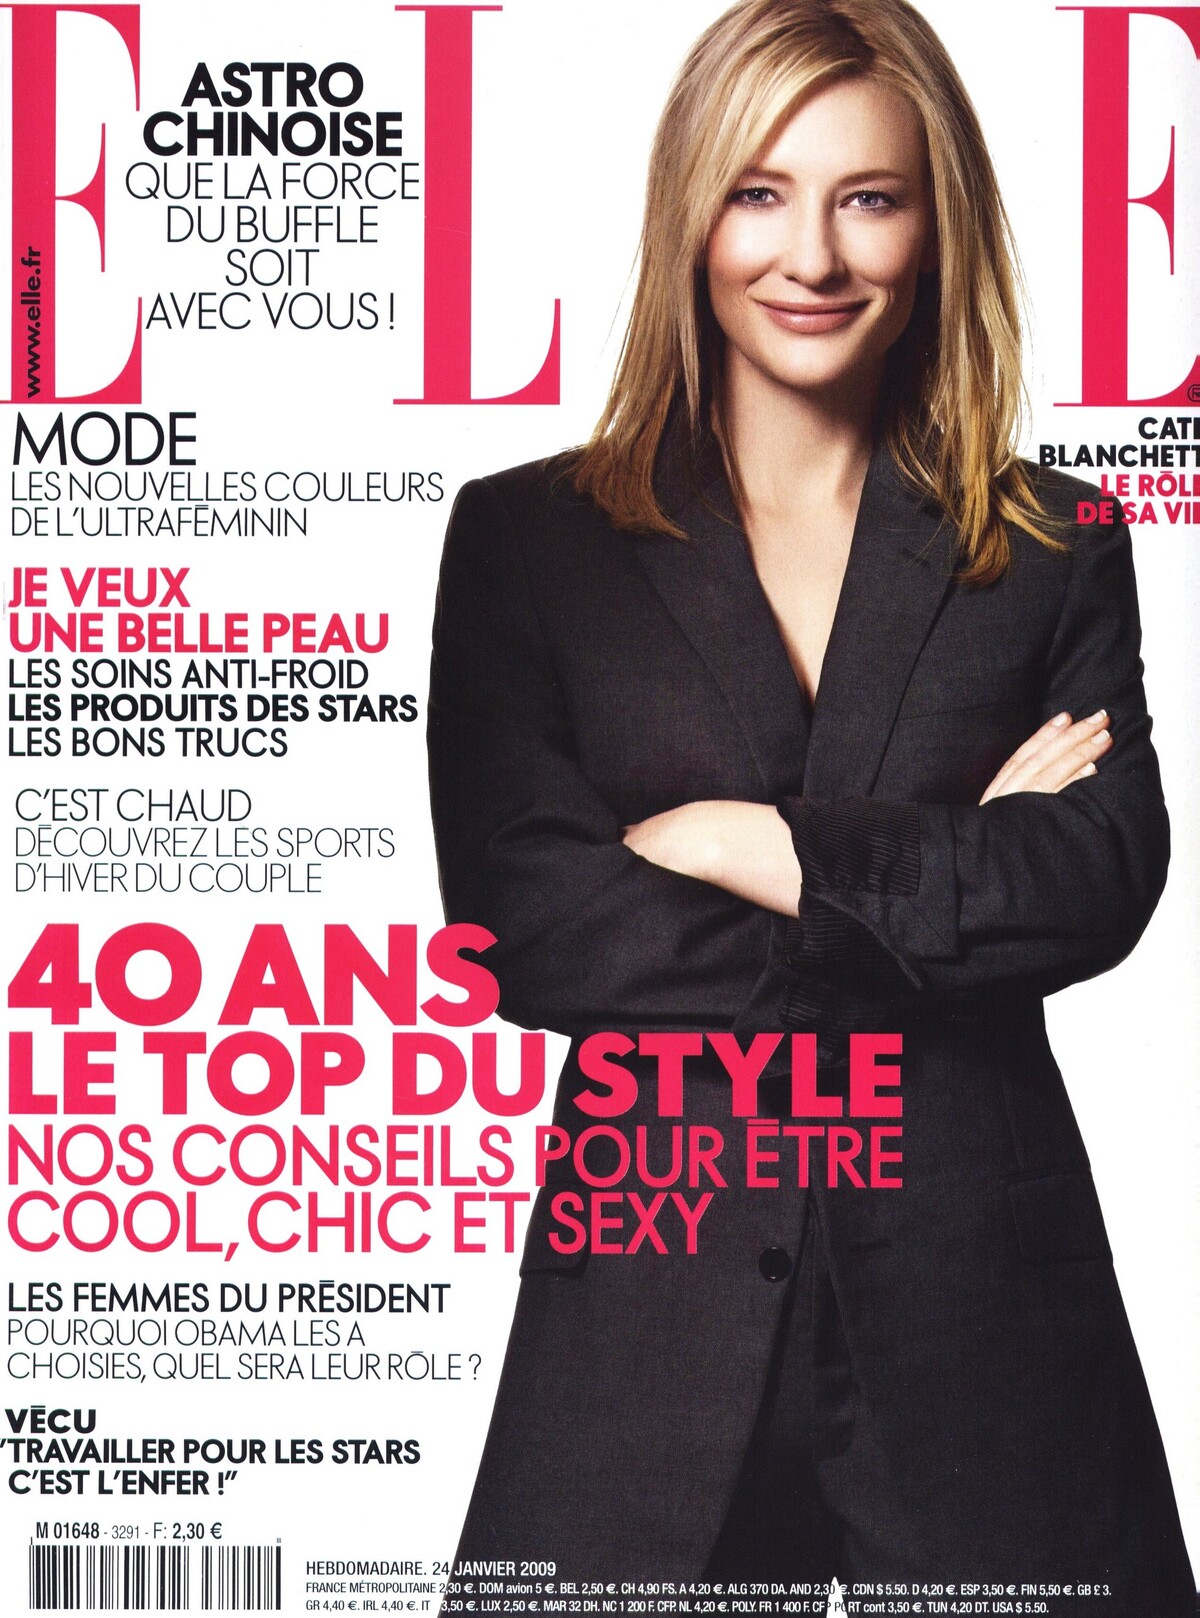 Кейт Бланшетт в журнале ELLE. Франция. Январь 2009